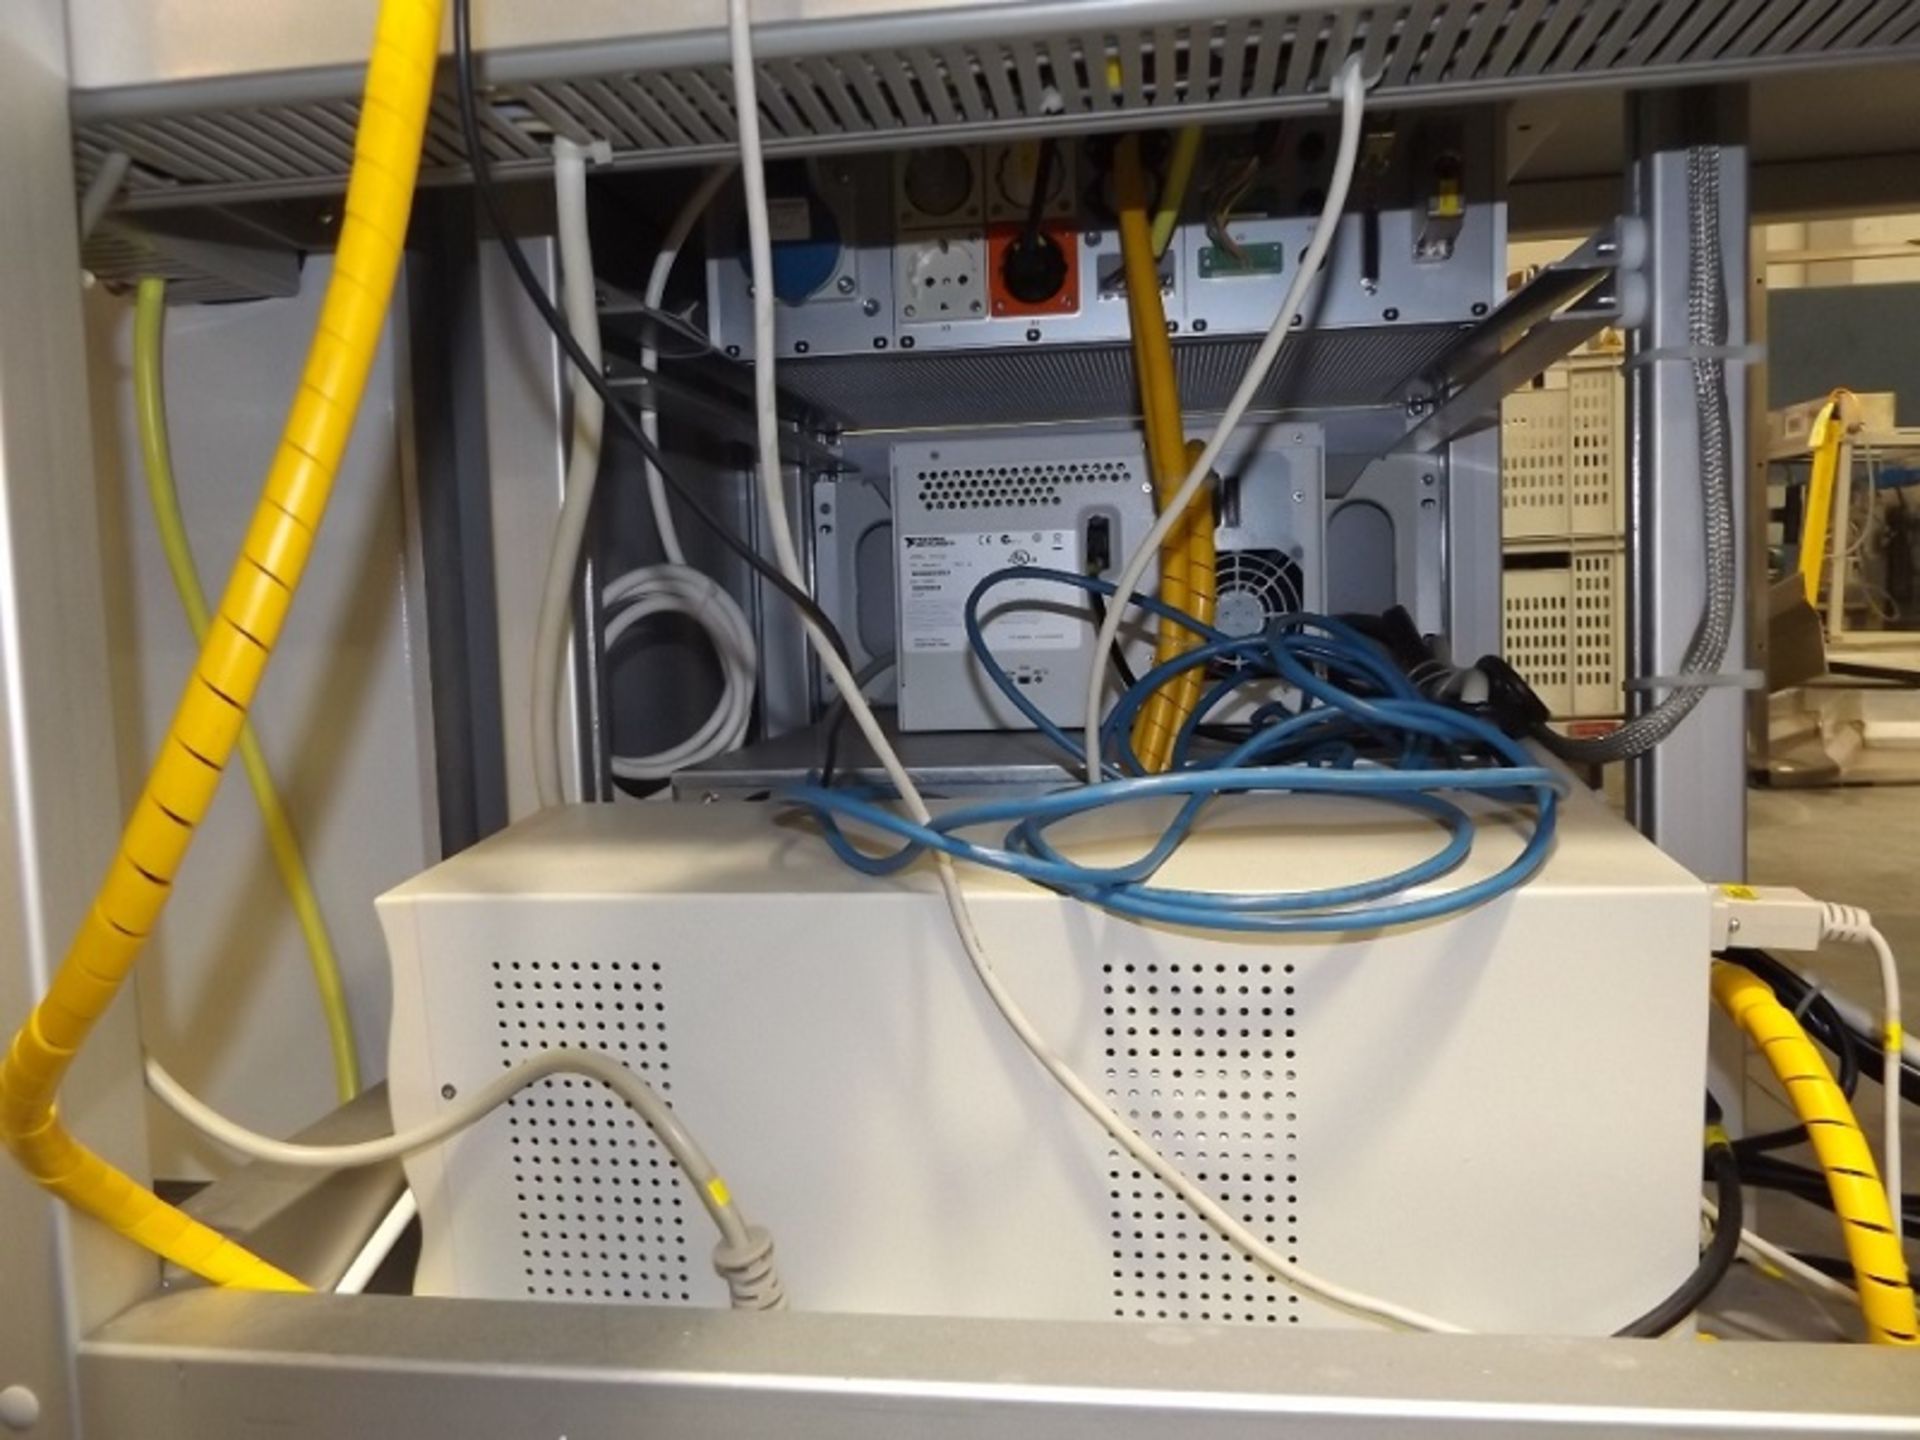 Konrad electronics testing station for ultrasonic - Image 9 of 12